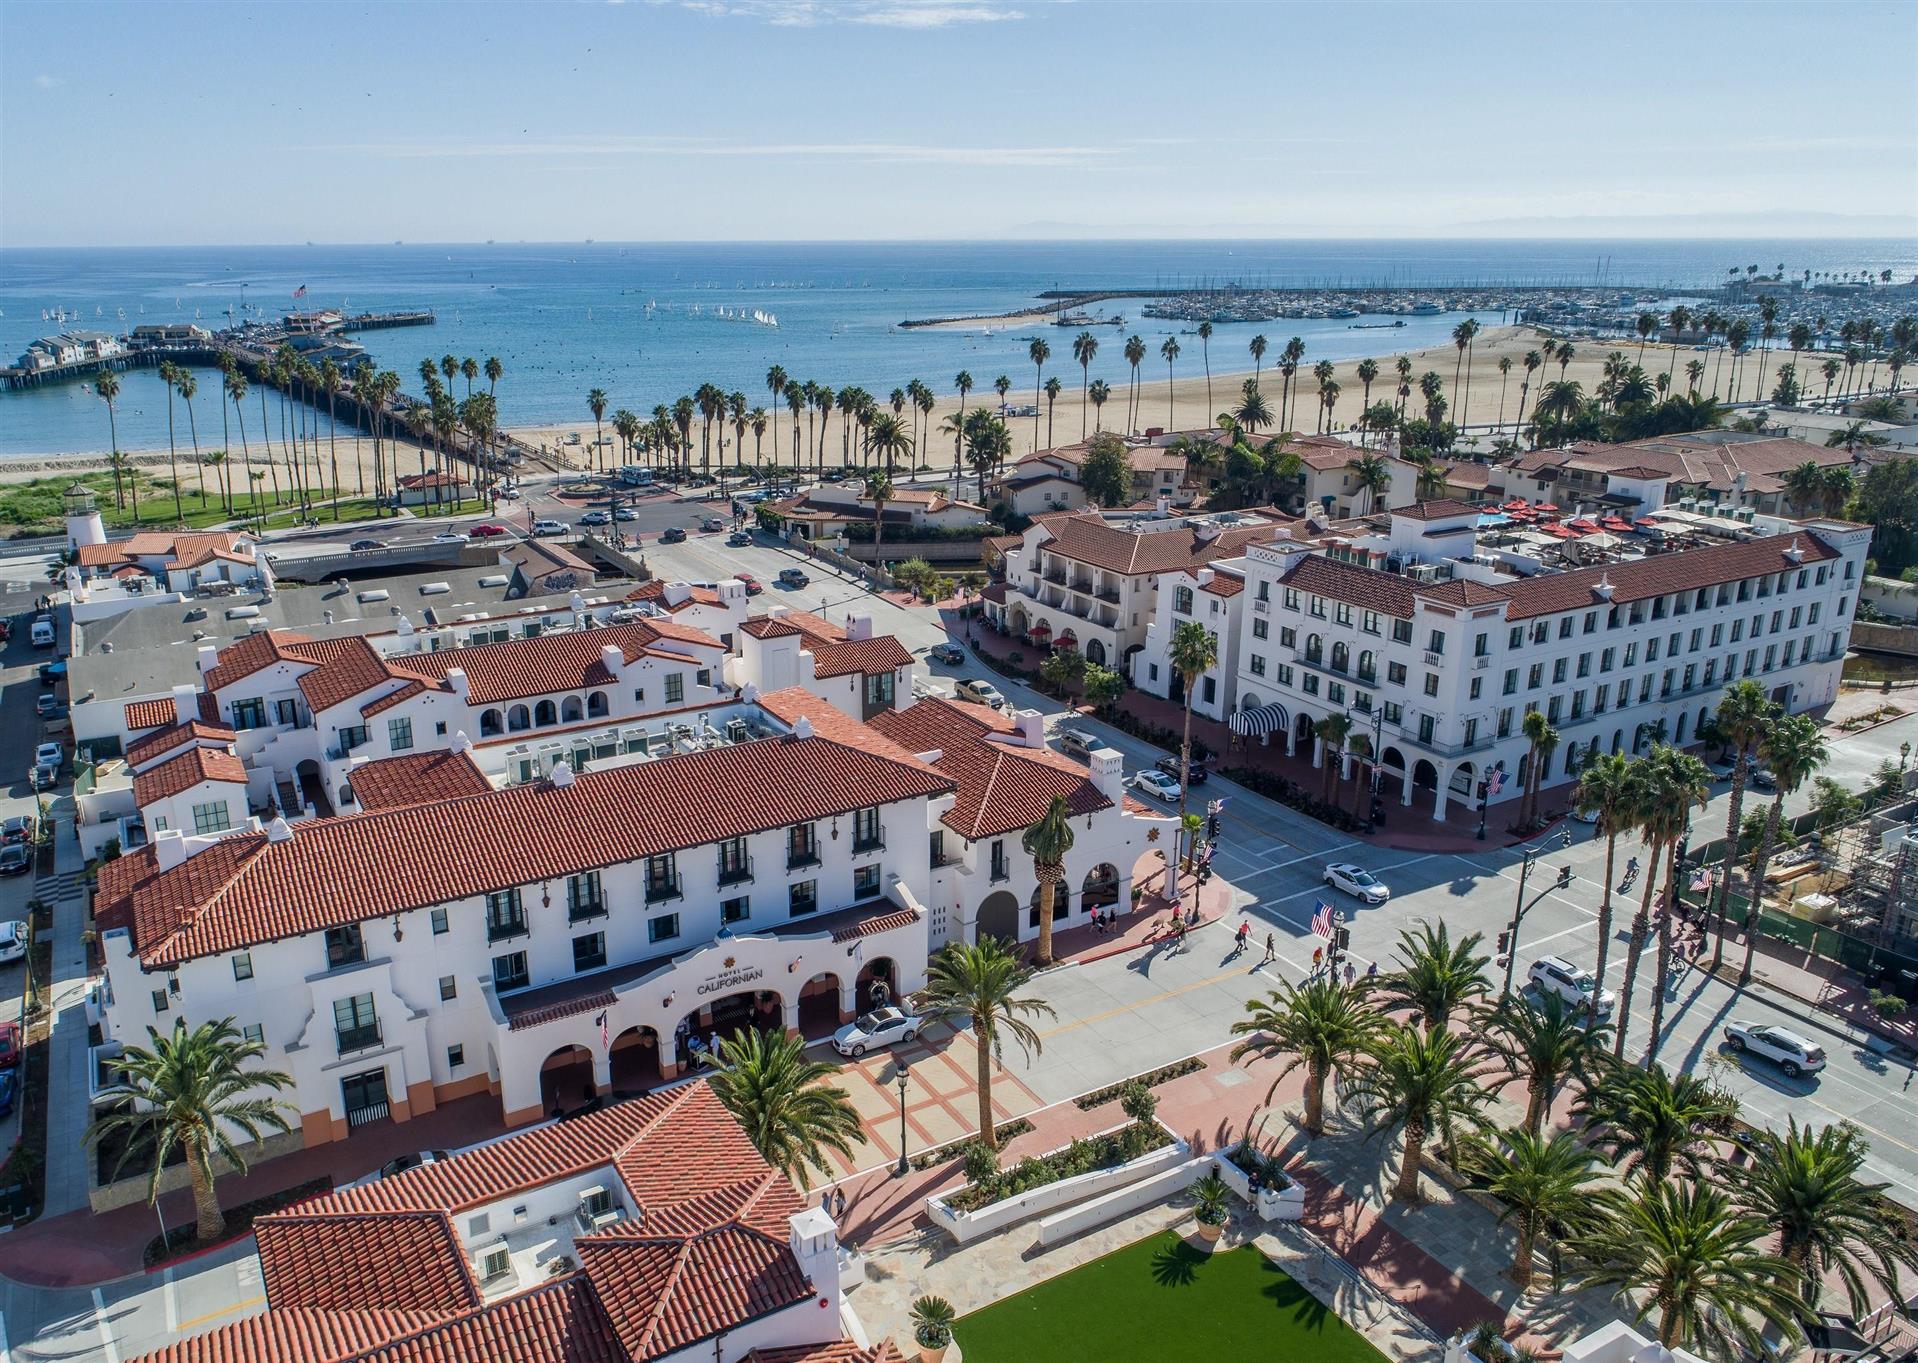 Hotel Californian in Santa Barbara, CA